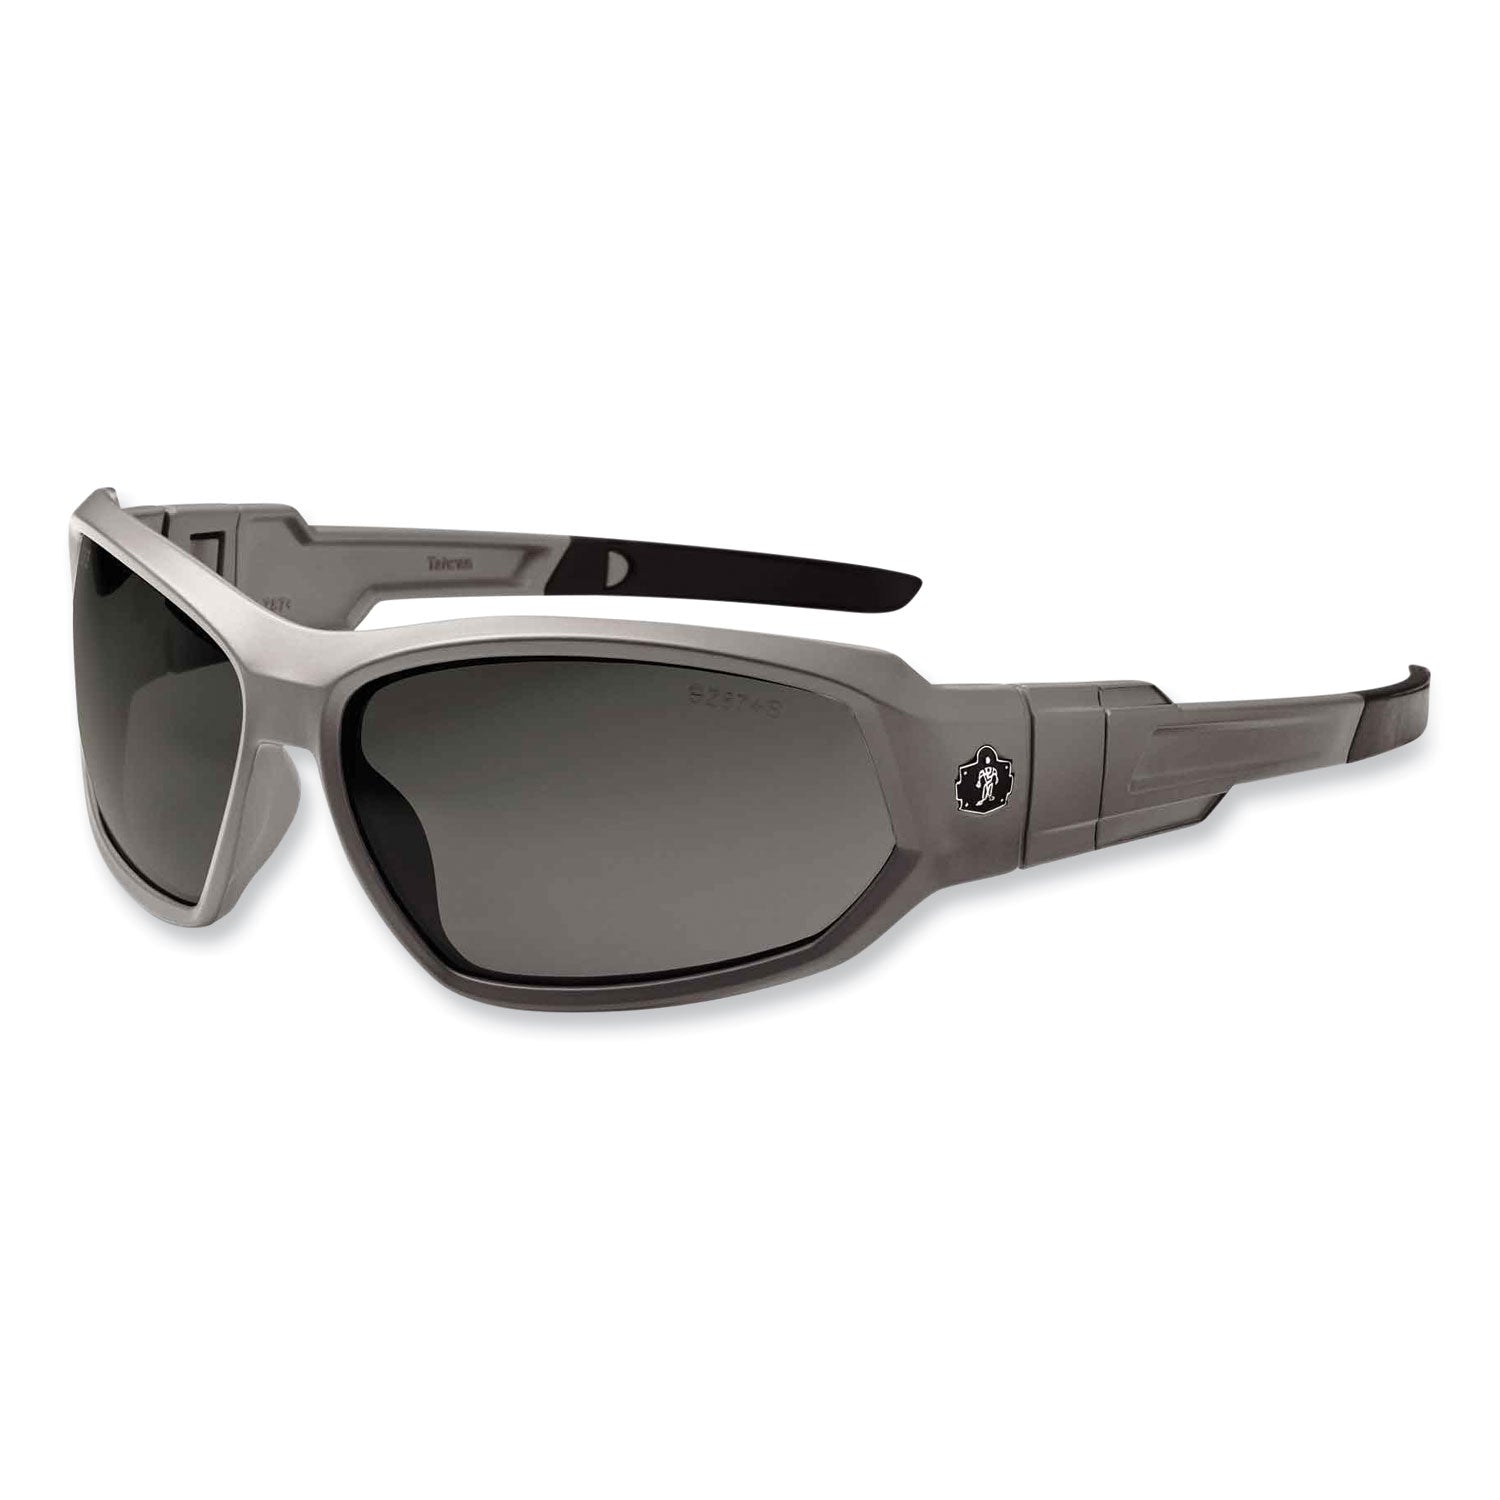 skullerz-loki-safety-glasses-goggles-matte-gray-nylon-impact-frame-polarized-smoke-polycarb-lensships-in-1-3-business-days_ego56131 - 1